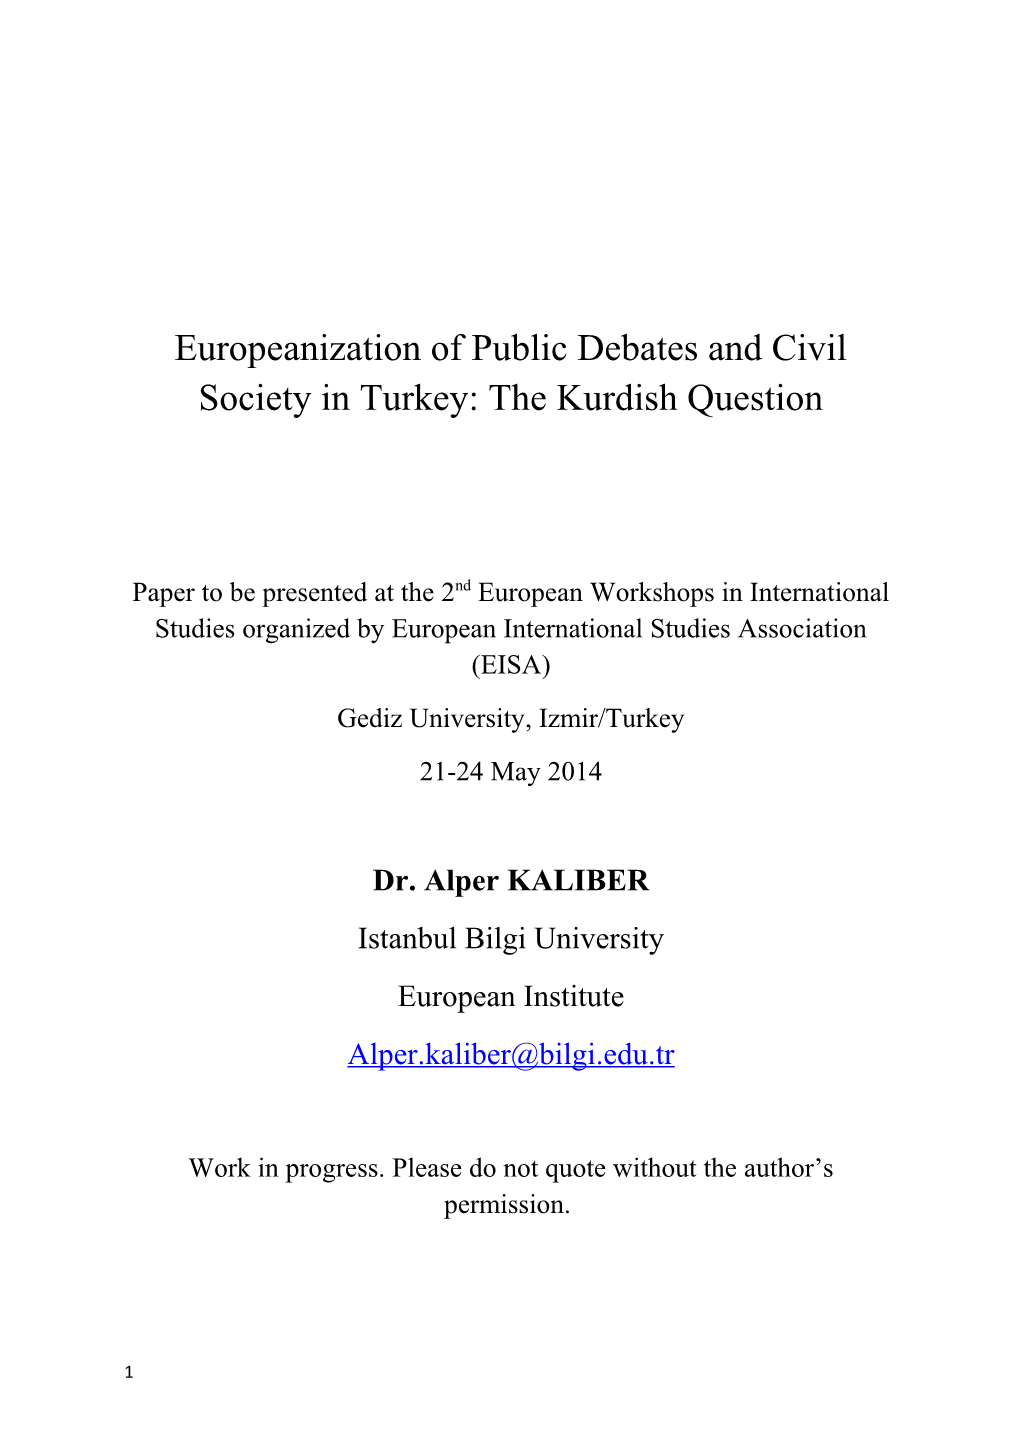 Europeanization of Public Debates and Civil Society in Turkey: the Kurdish Question